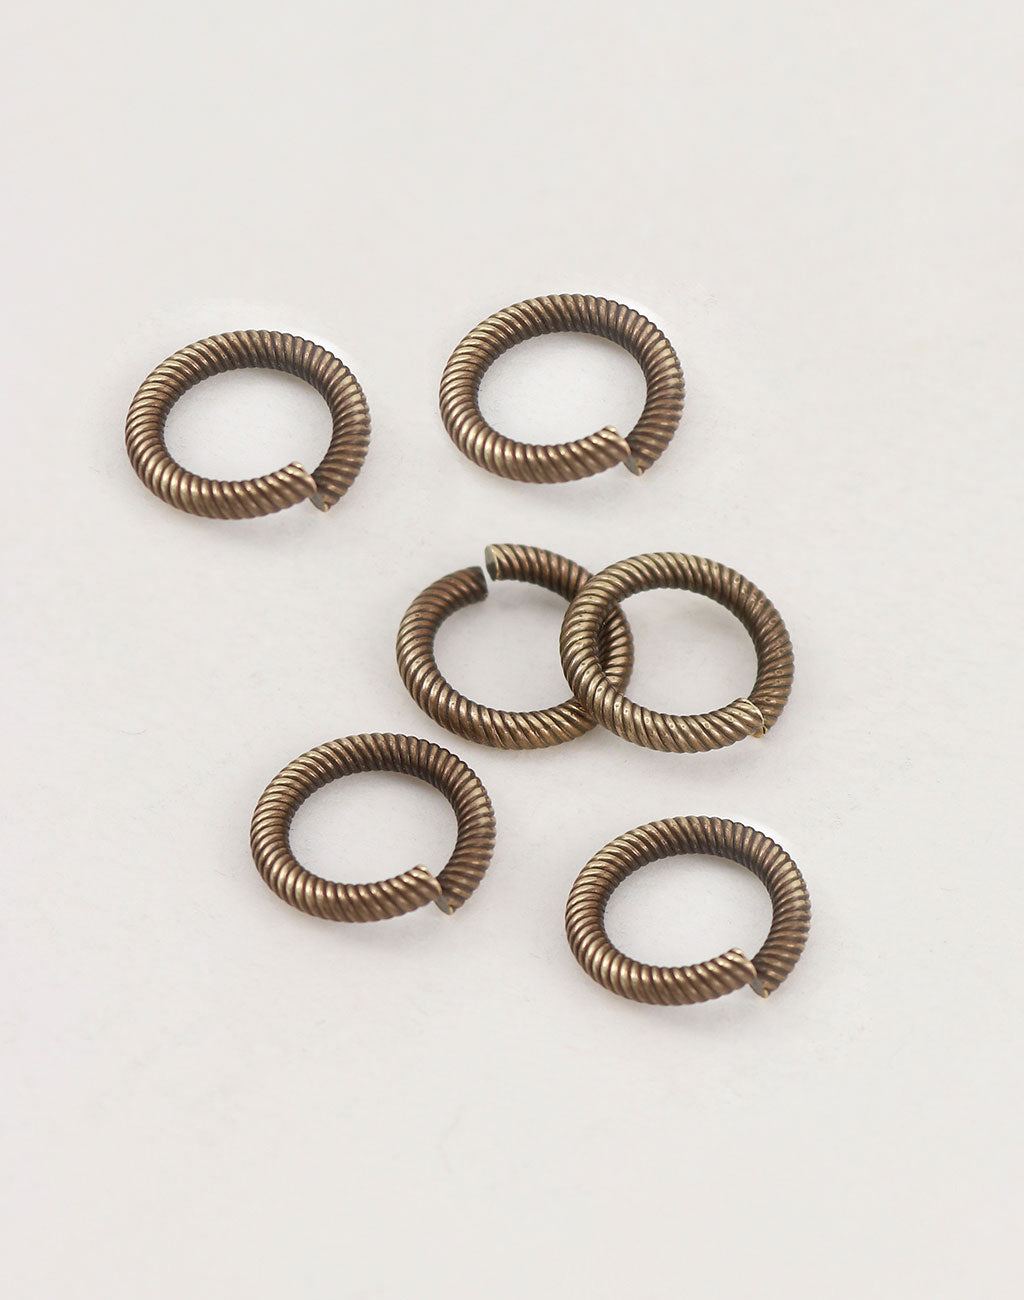 Coiled Cable Jump Ring, 14.5mm, 11ga, (3pcs)